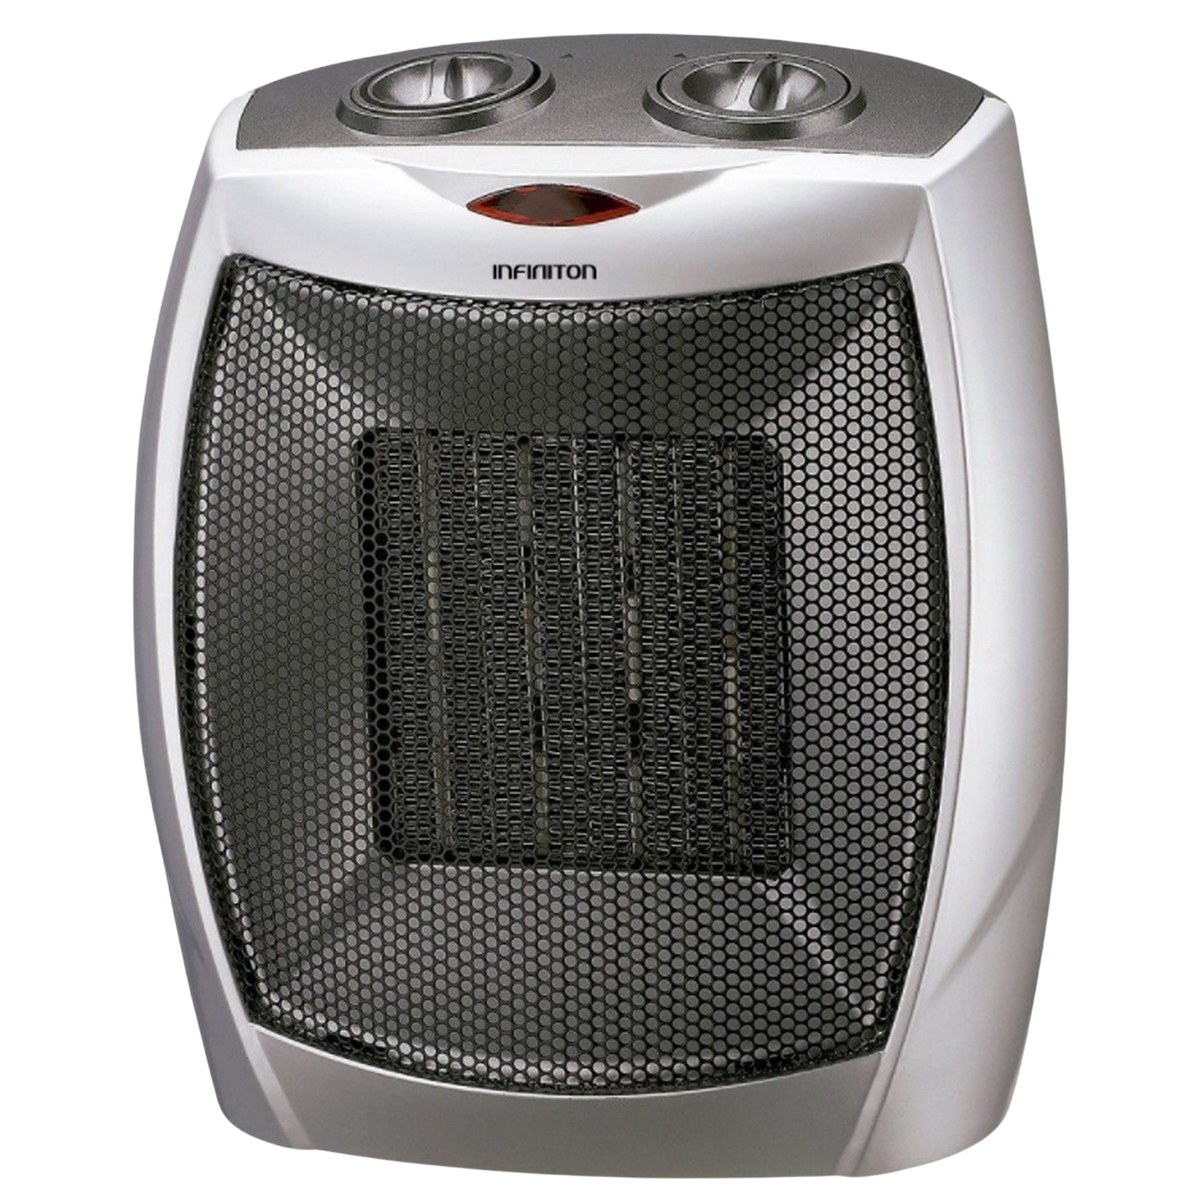 Infiniton Hptc902c 1500 w 3 niveles de calor ventilador seguro antivuelco gris vertical 1500w